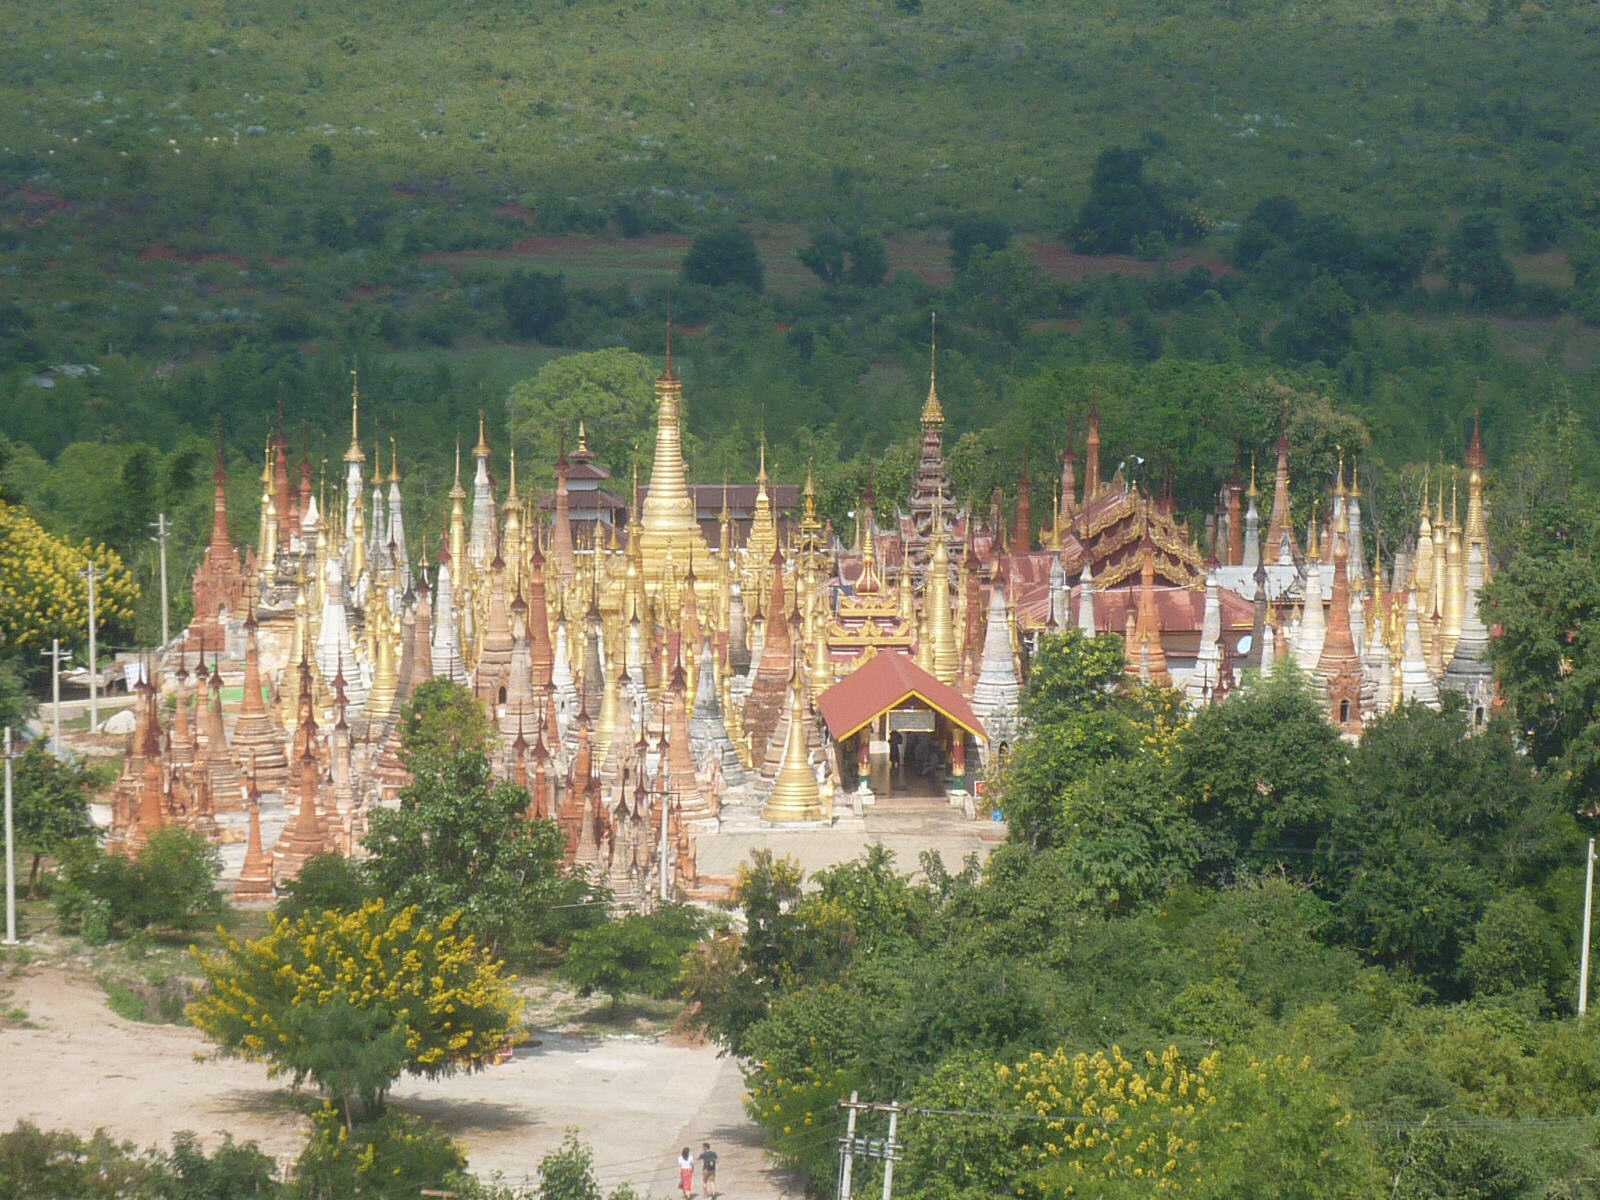 Inn Tein pagodas near Inle lake, Burma